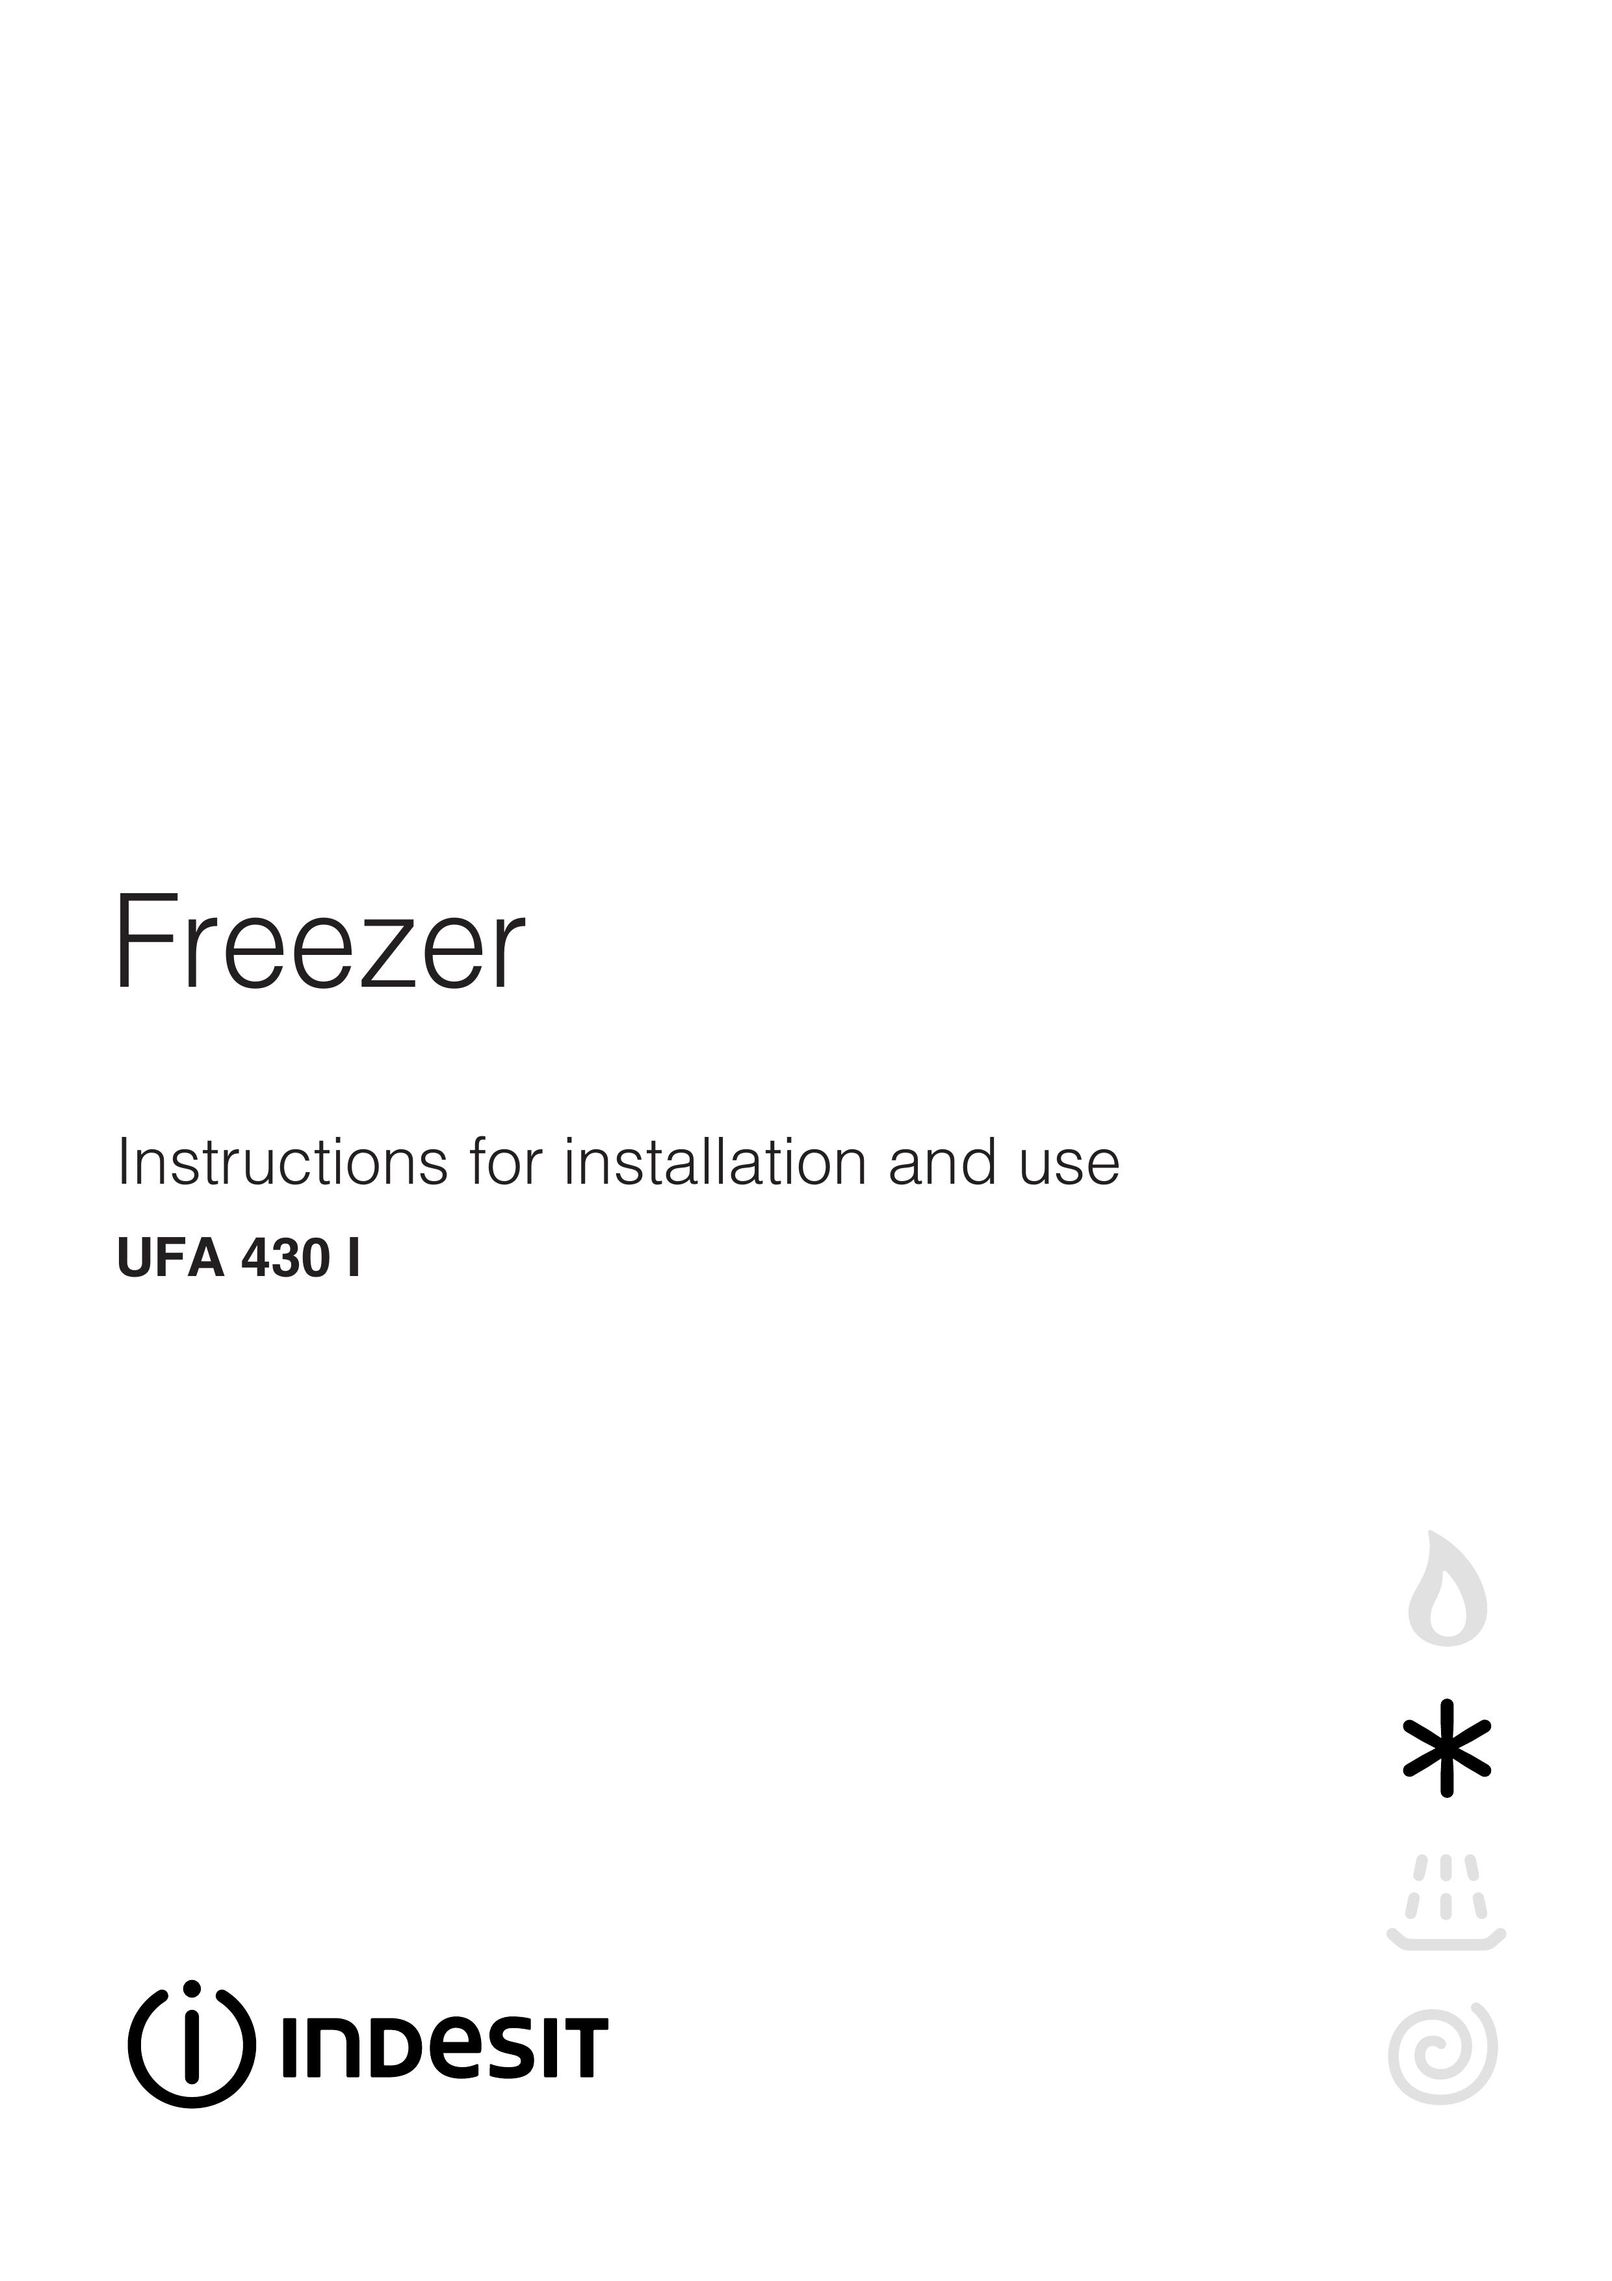 Indesit UFA 430 I Freezer User Manual